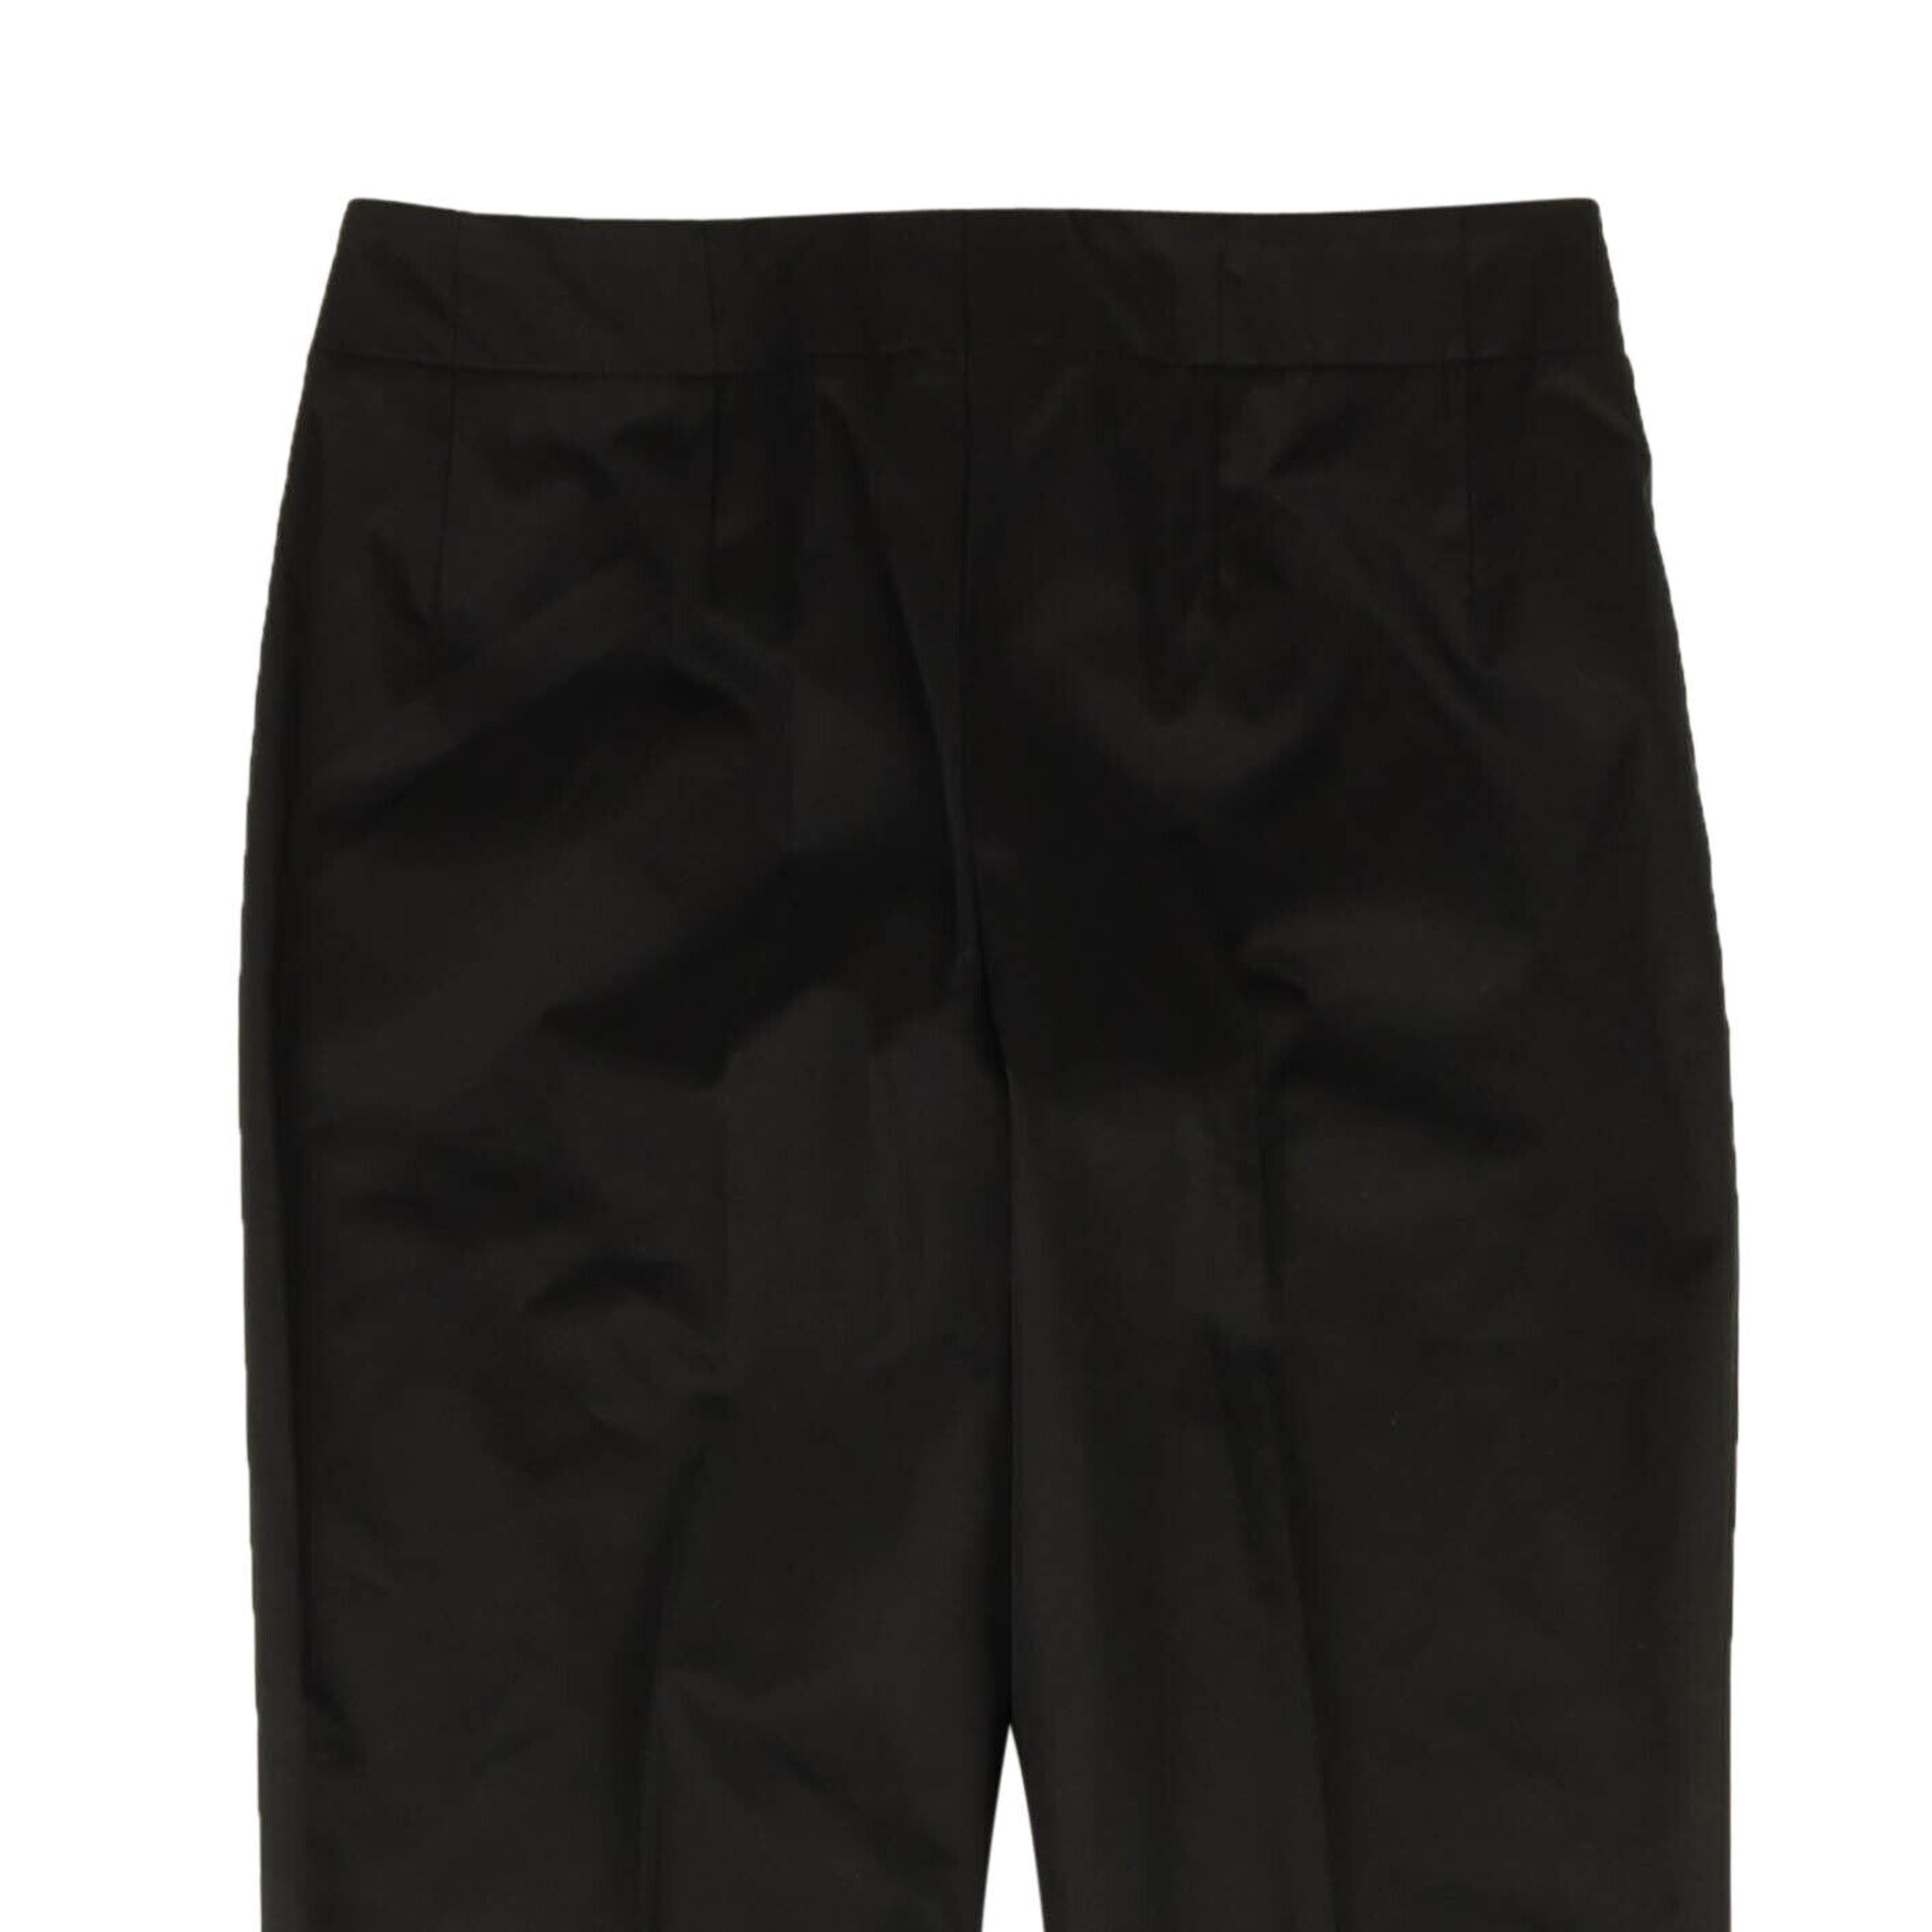 Alternate View 3 of Incotex Flat Front Dress Pants - Black